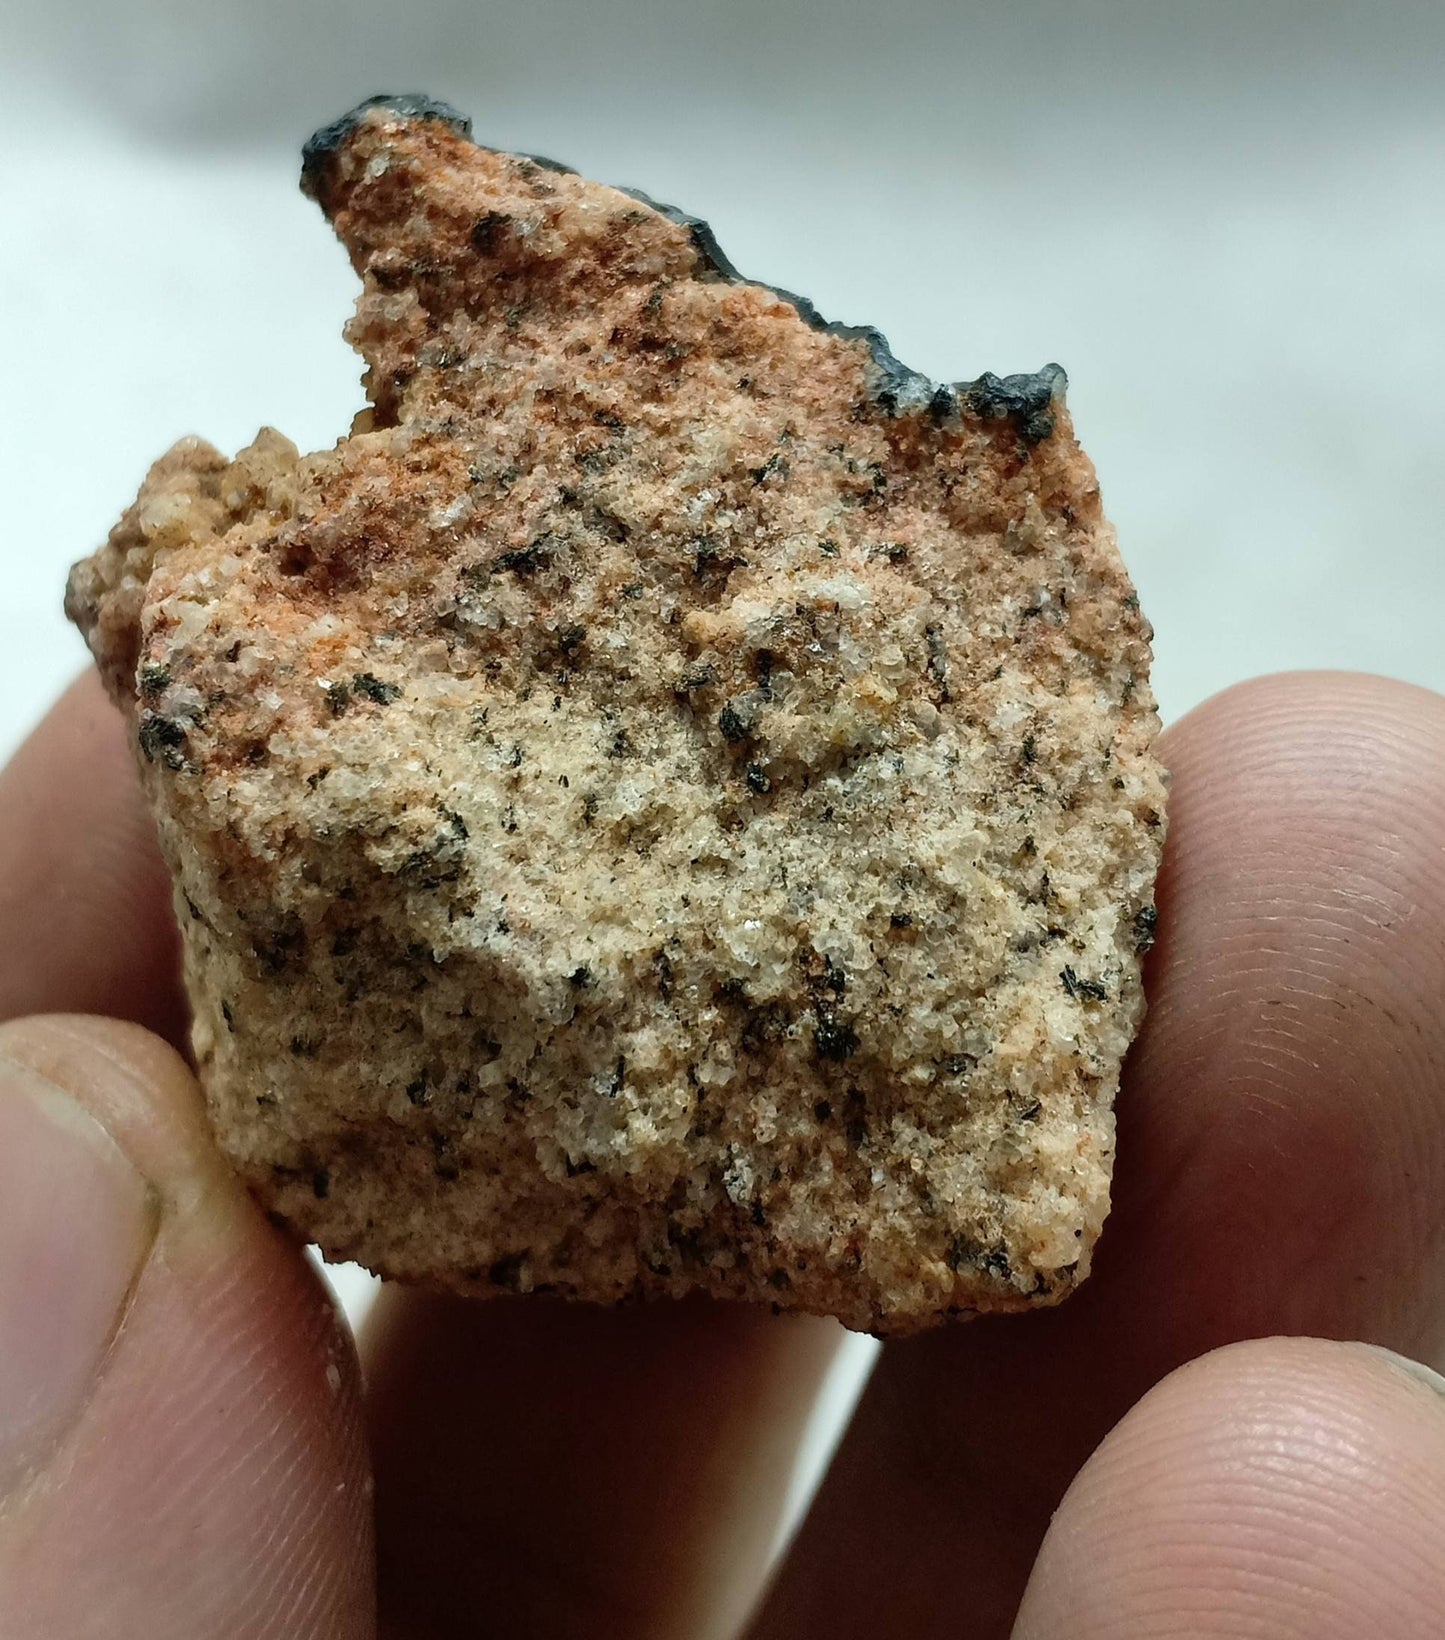 An amazing specimen of Hollandite on matrix 38.5g